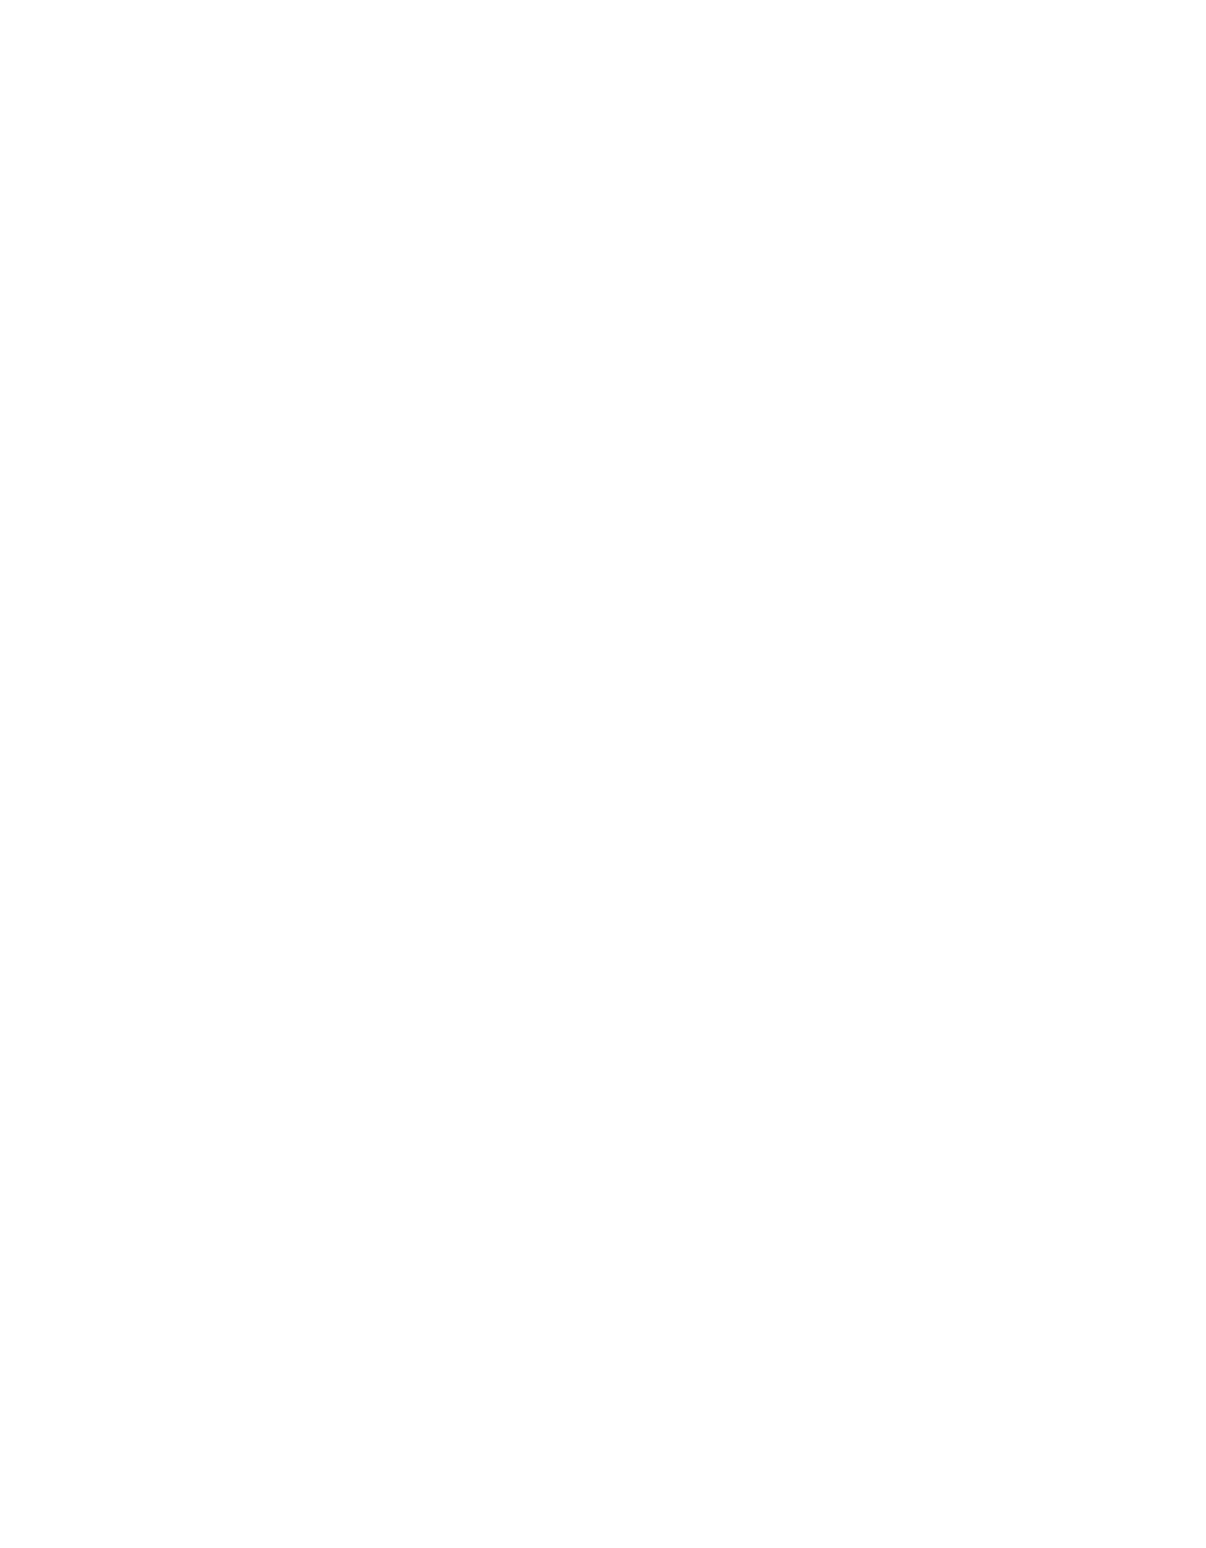 Havertys logo for dark backgrounds (transparent PNG)